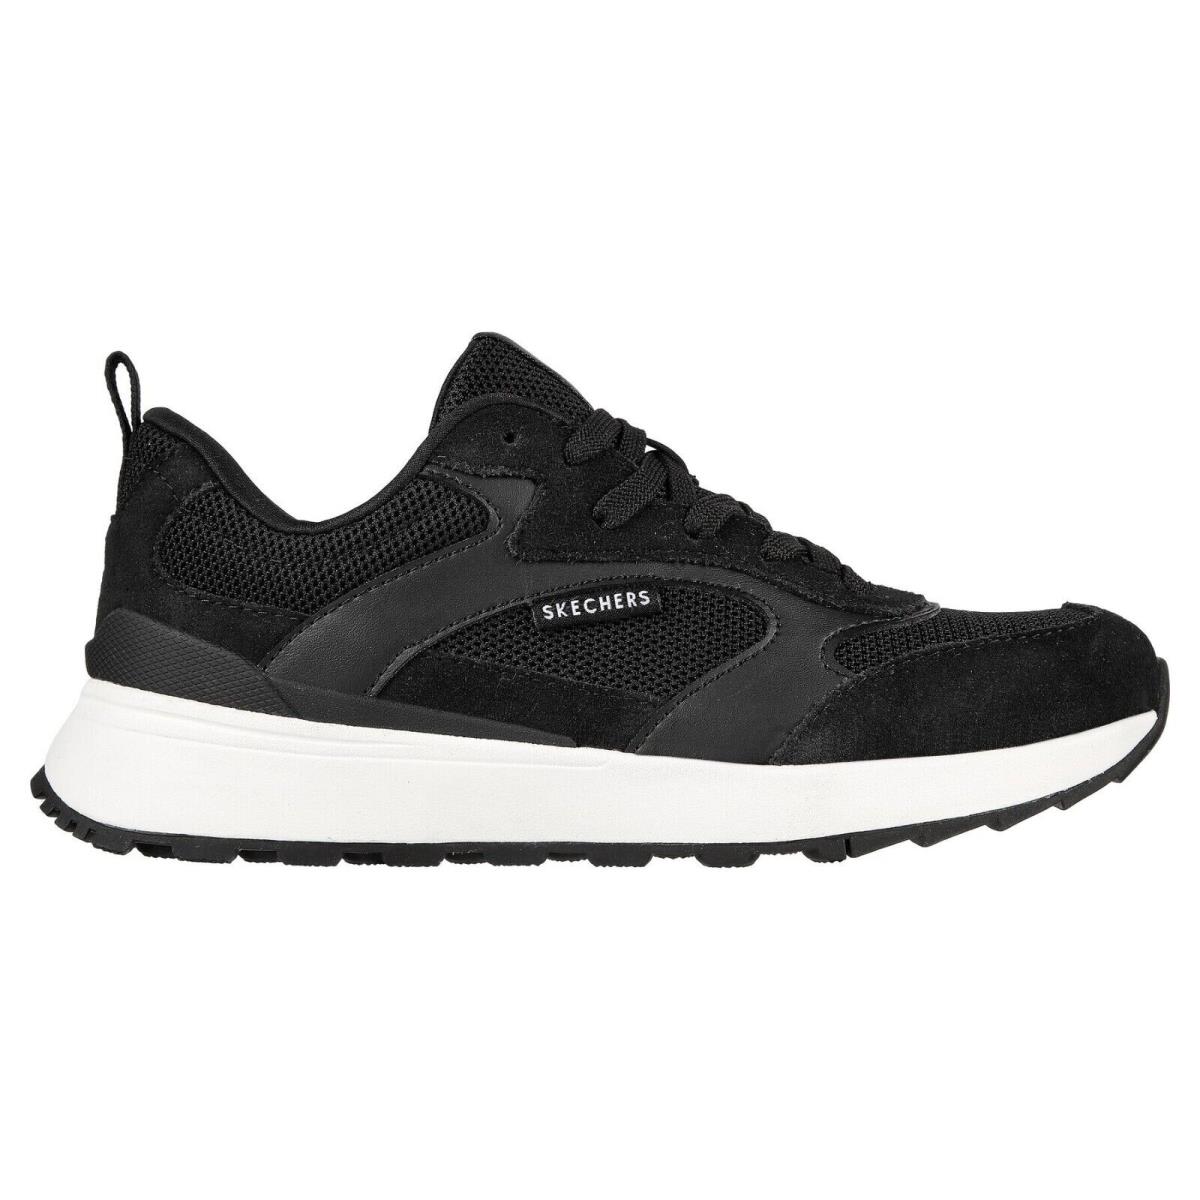 Skechers shoes Sunny Street - Black 10